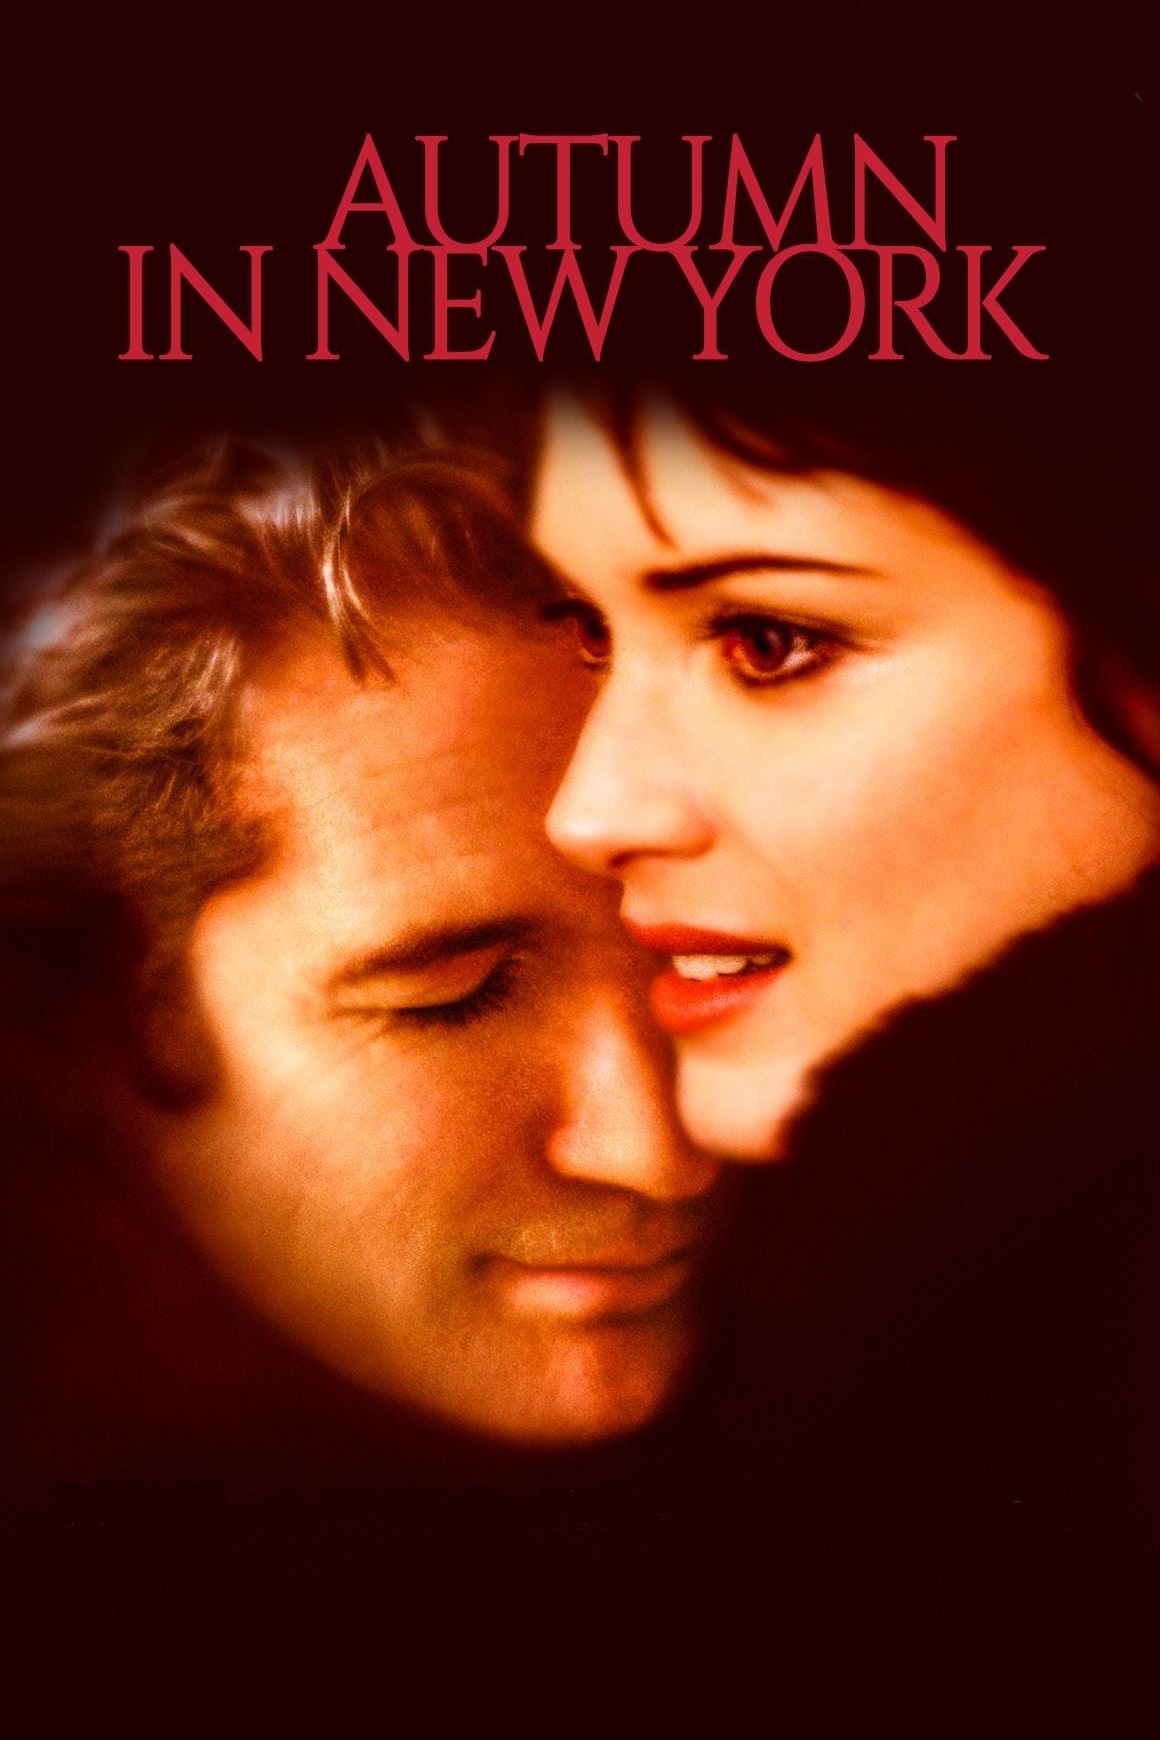 Autumn in New York [HD] (2000)